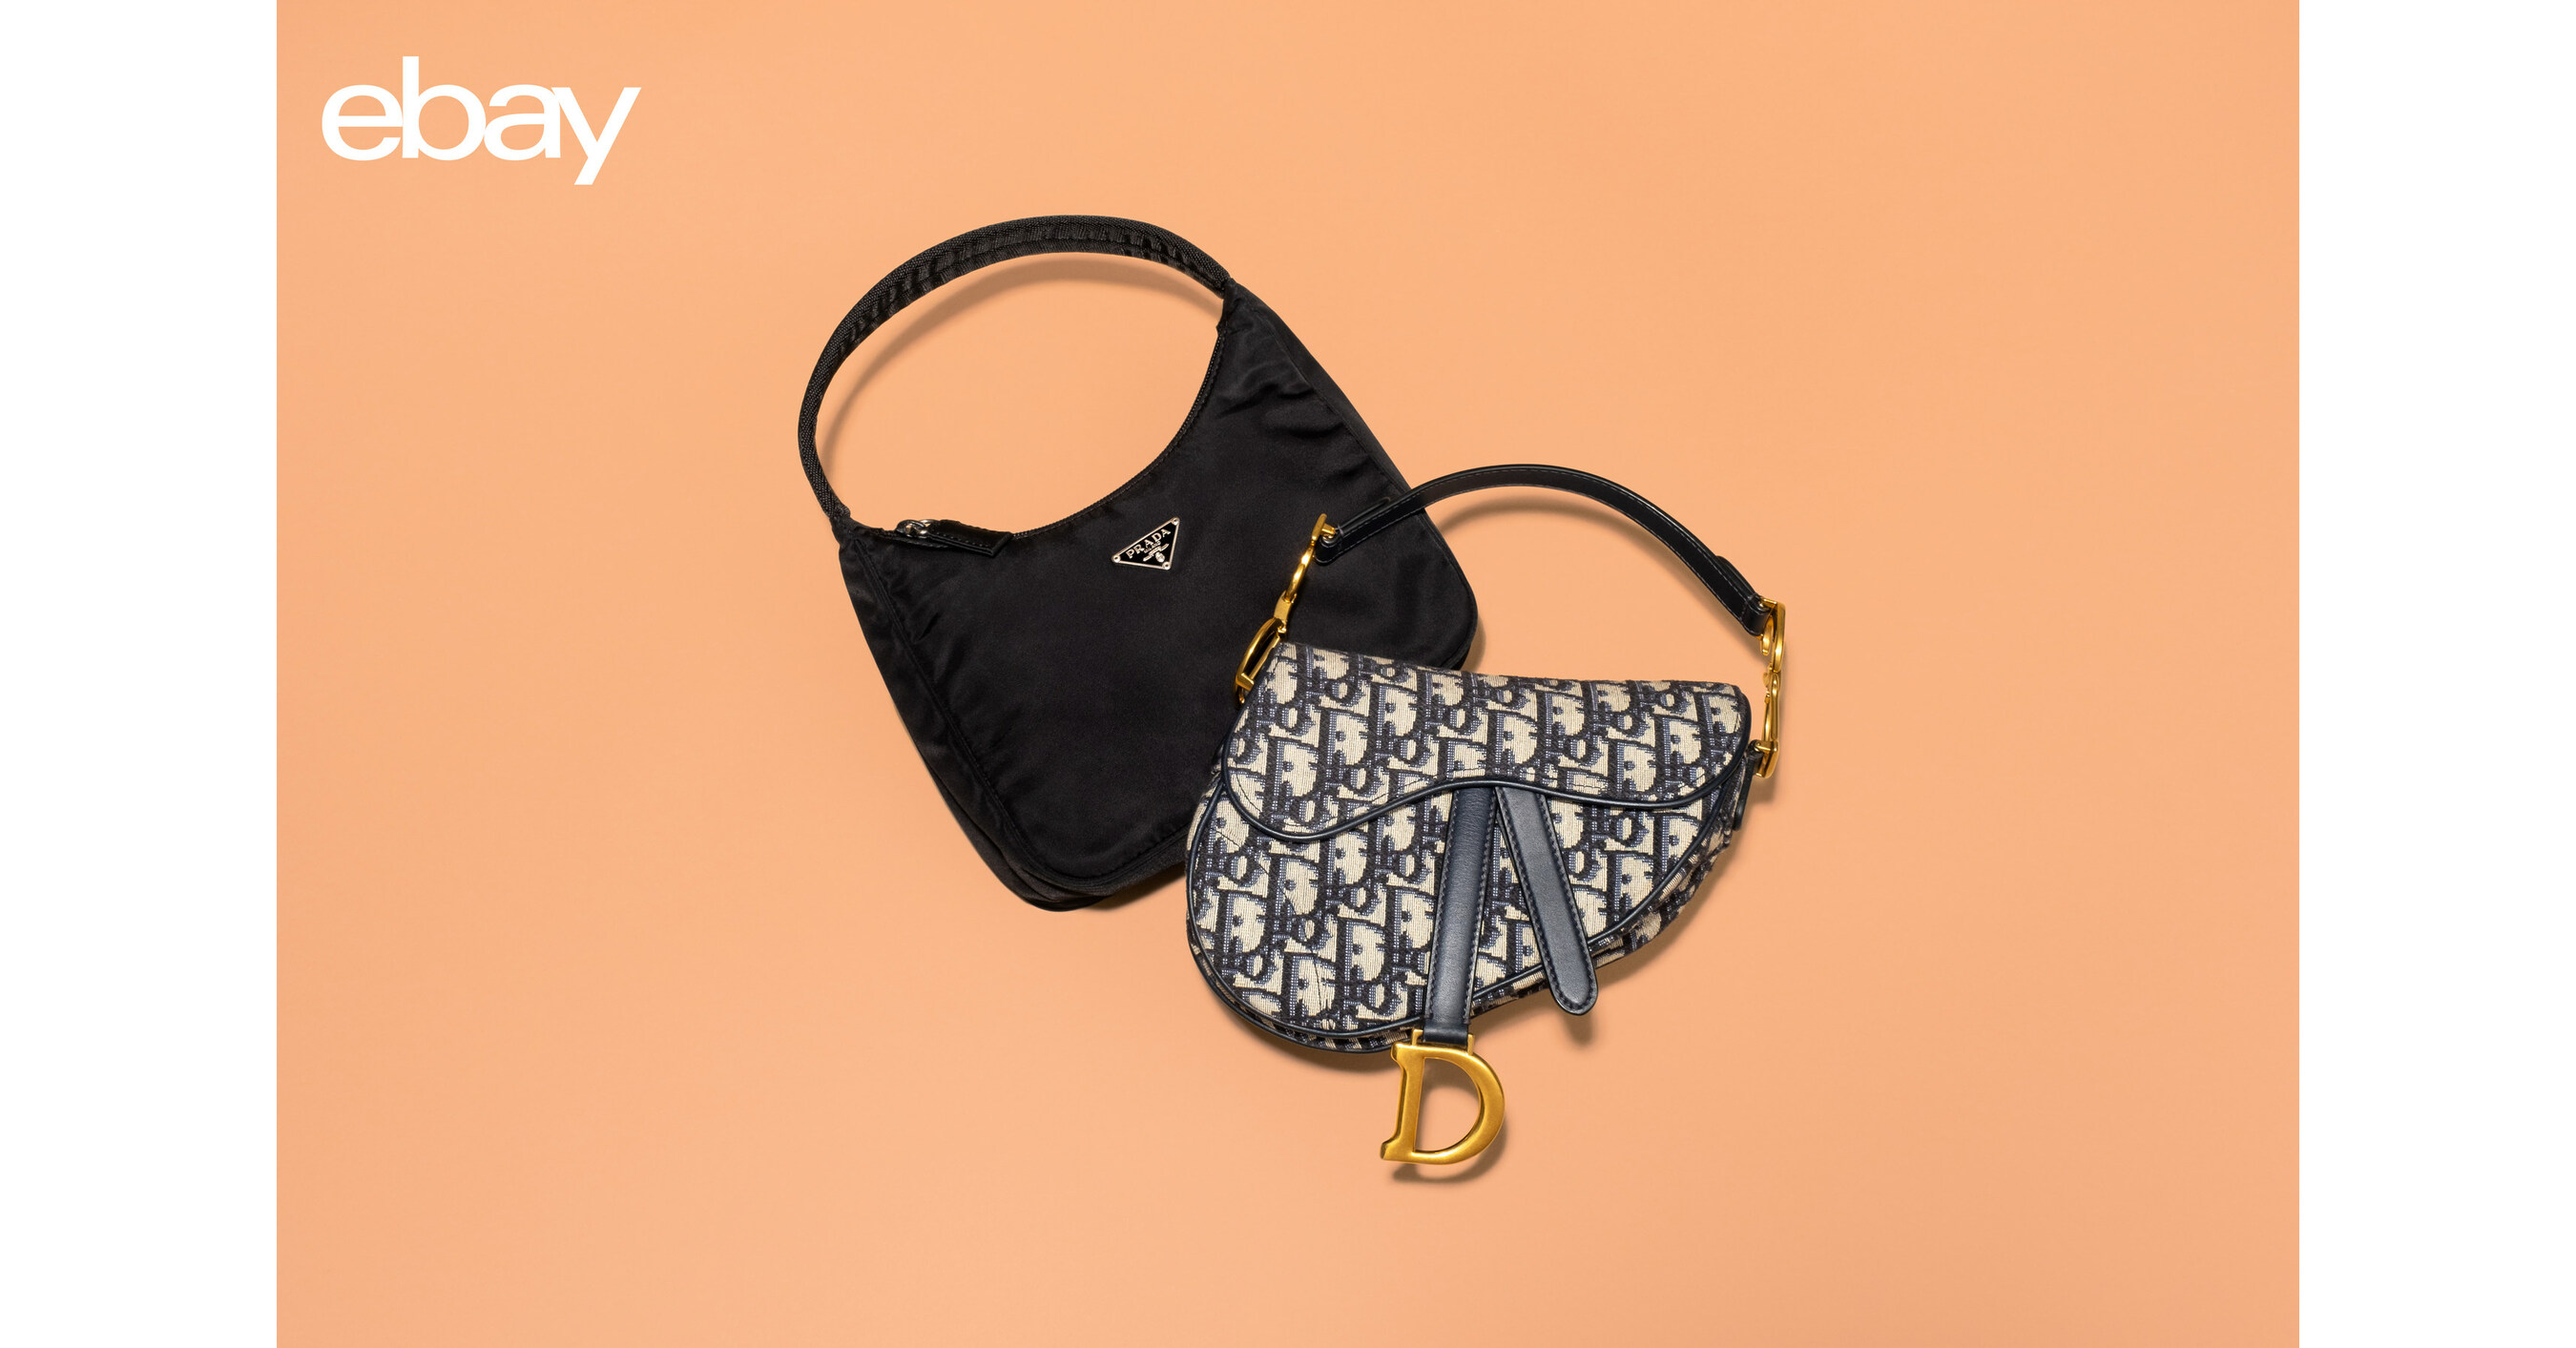 Buy Vintage Louis Vuitton Makeup Bag Designer Handbag Label Online in India  